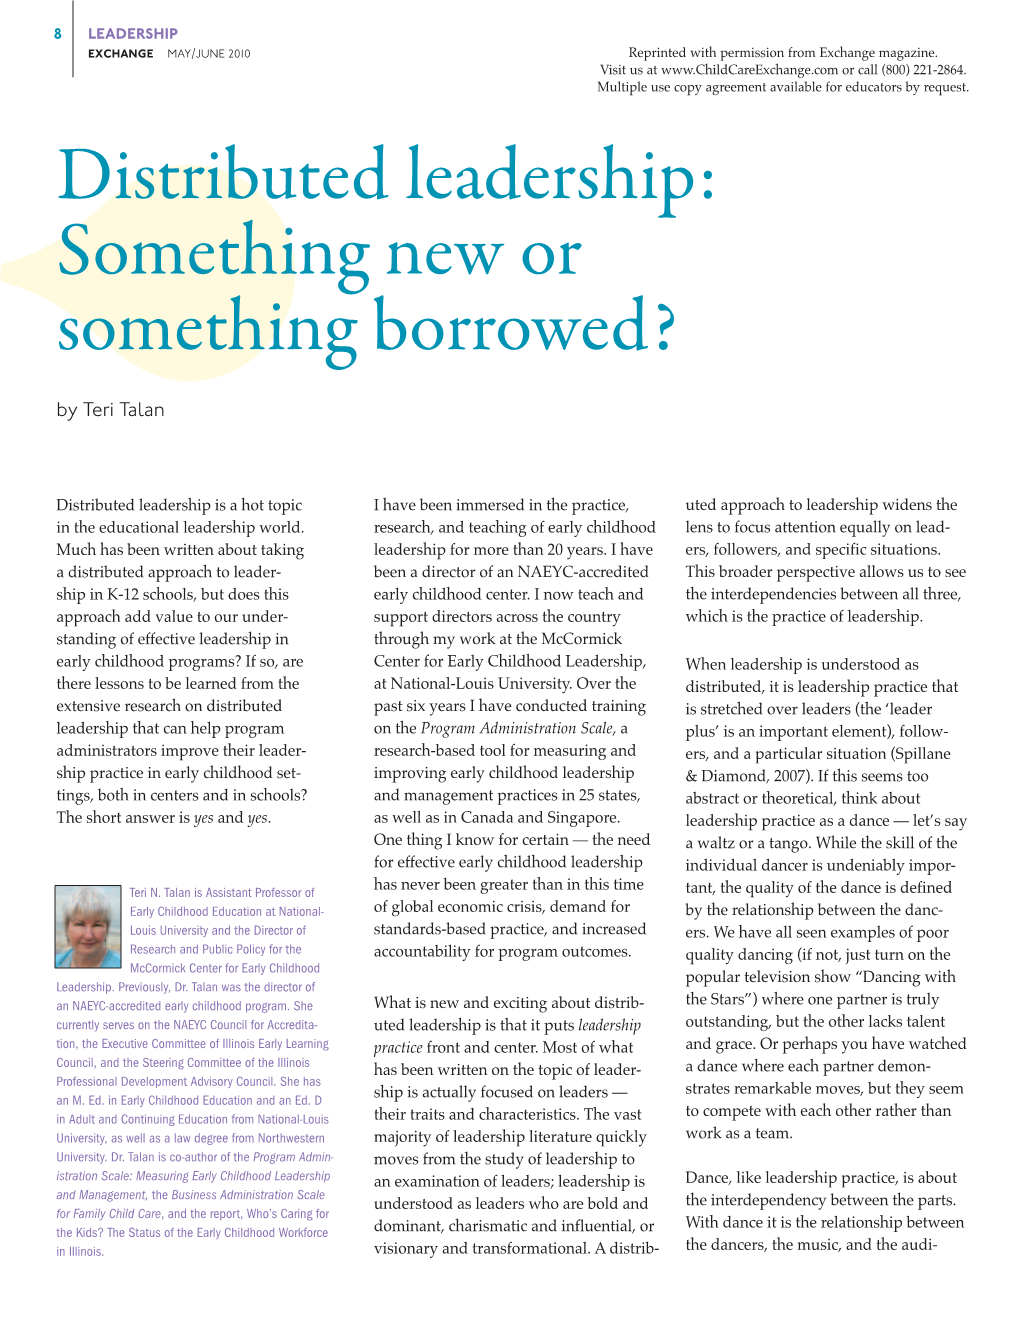 Distributed Leadership: Something New Or Something Borrowed?